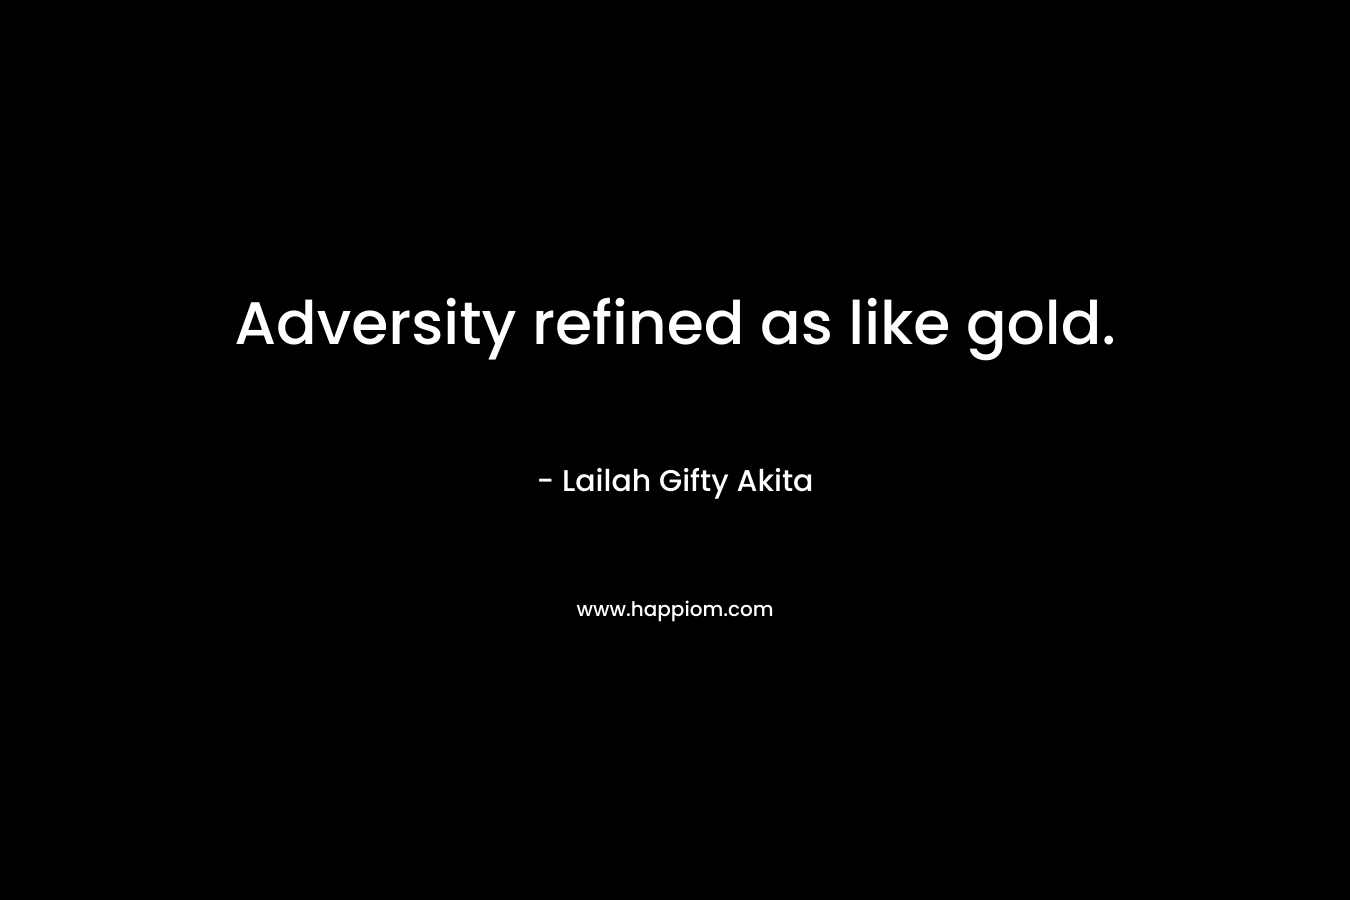 Adversity refined as like gold.